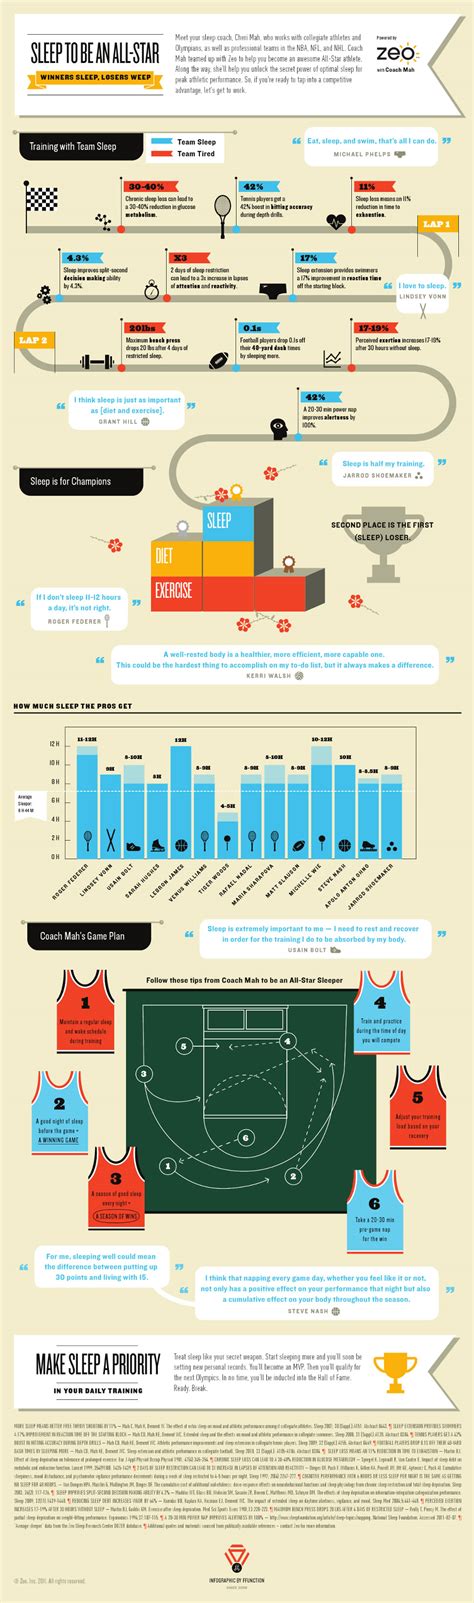 sleep performance and pro athletes infographic mindbodygreen